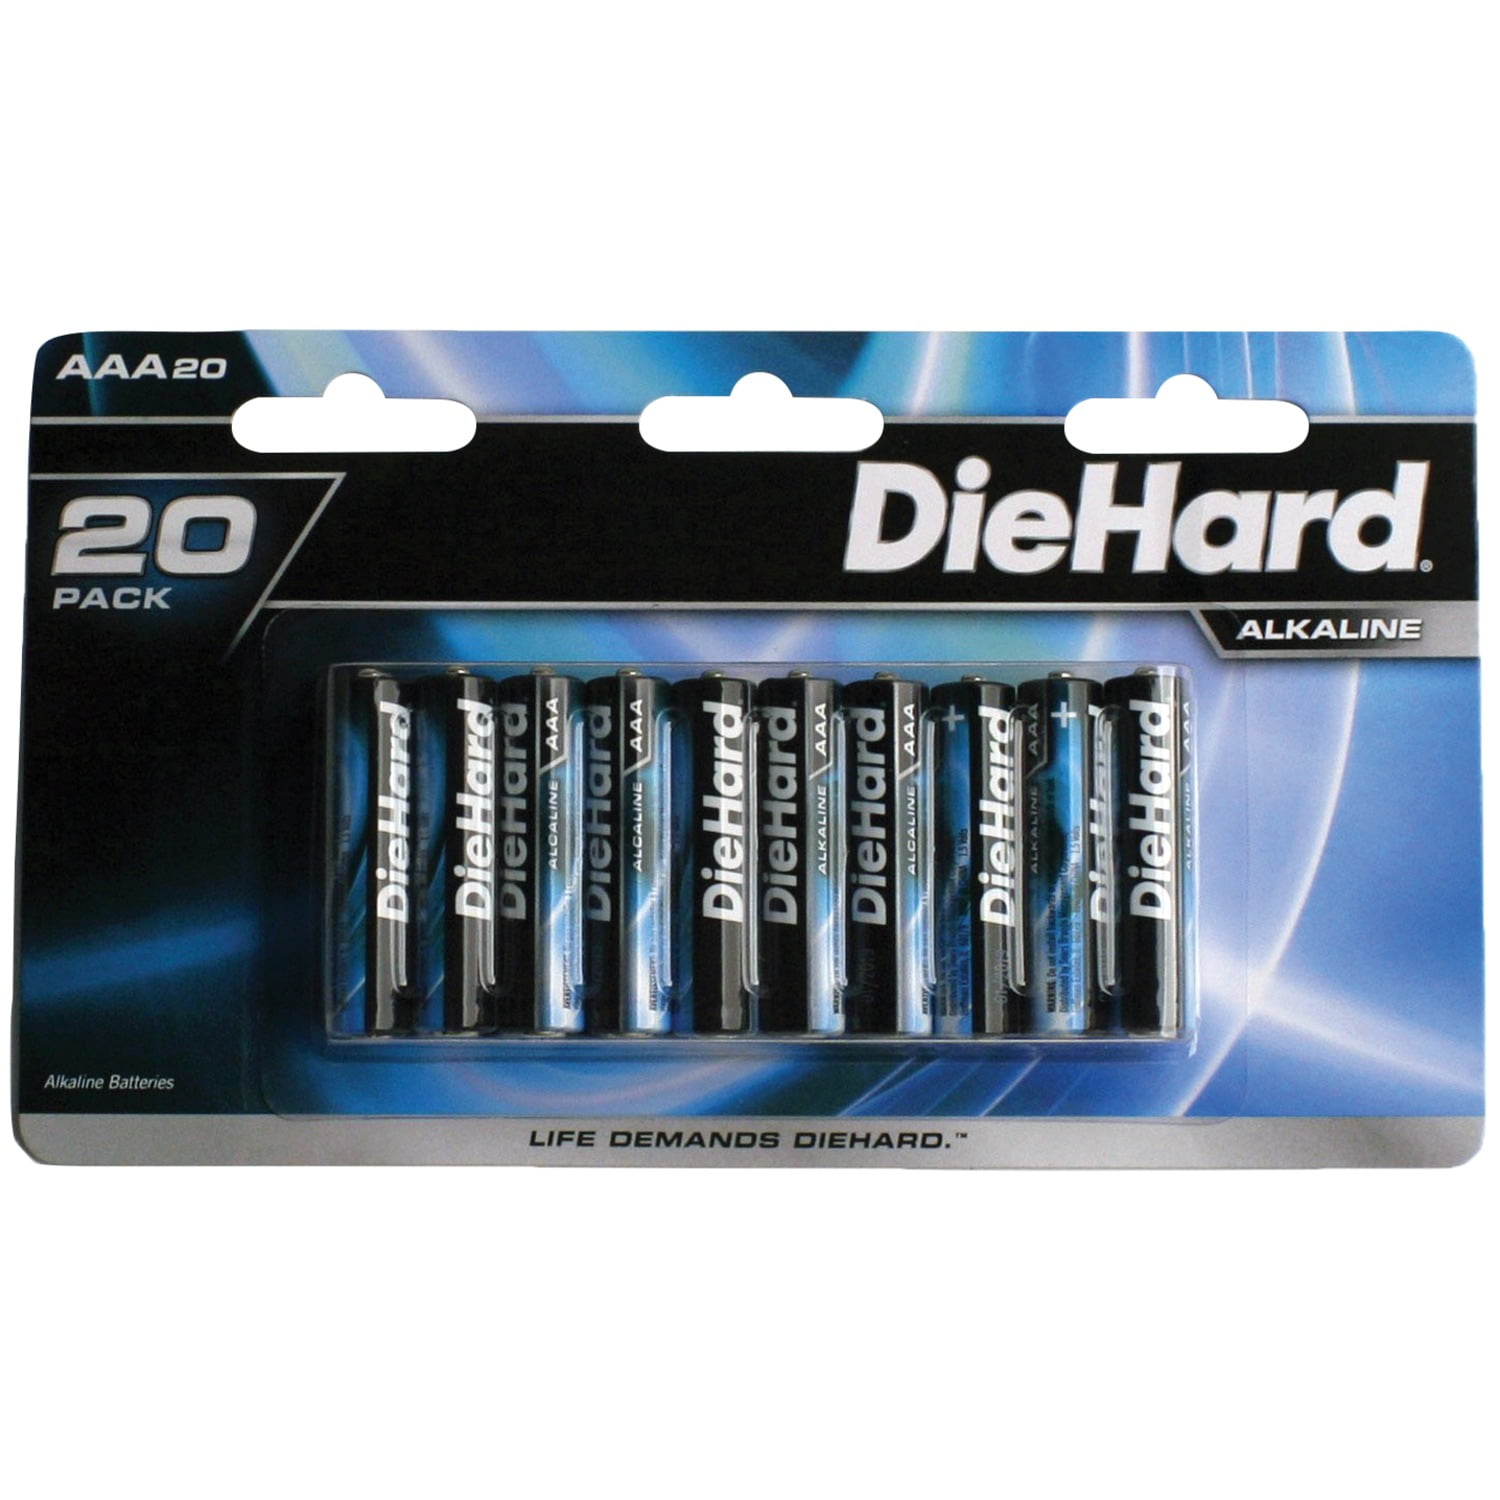 Diehard 41 1177 1 5 Volt Aaa Alkaline Batteries 20pk